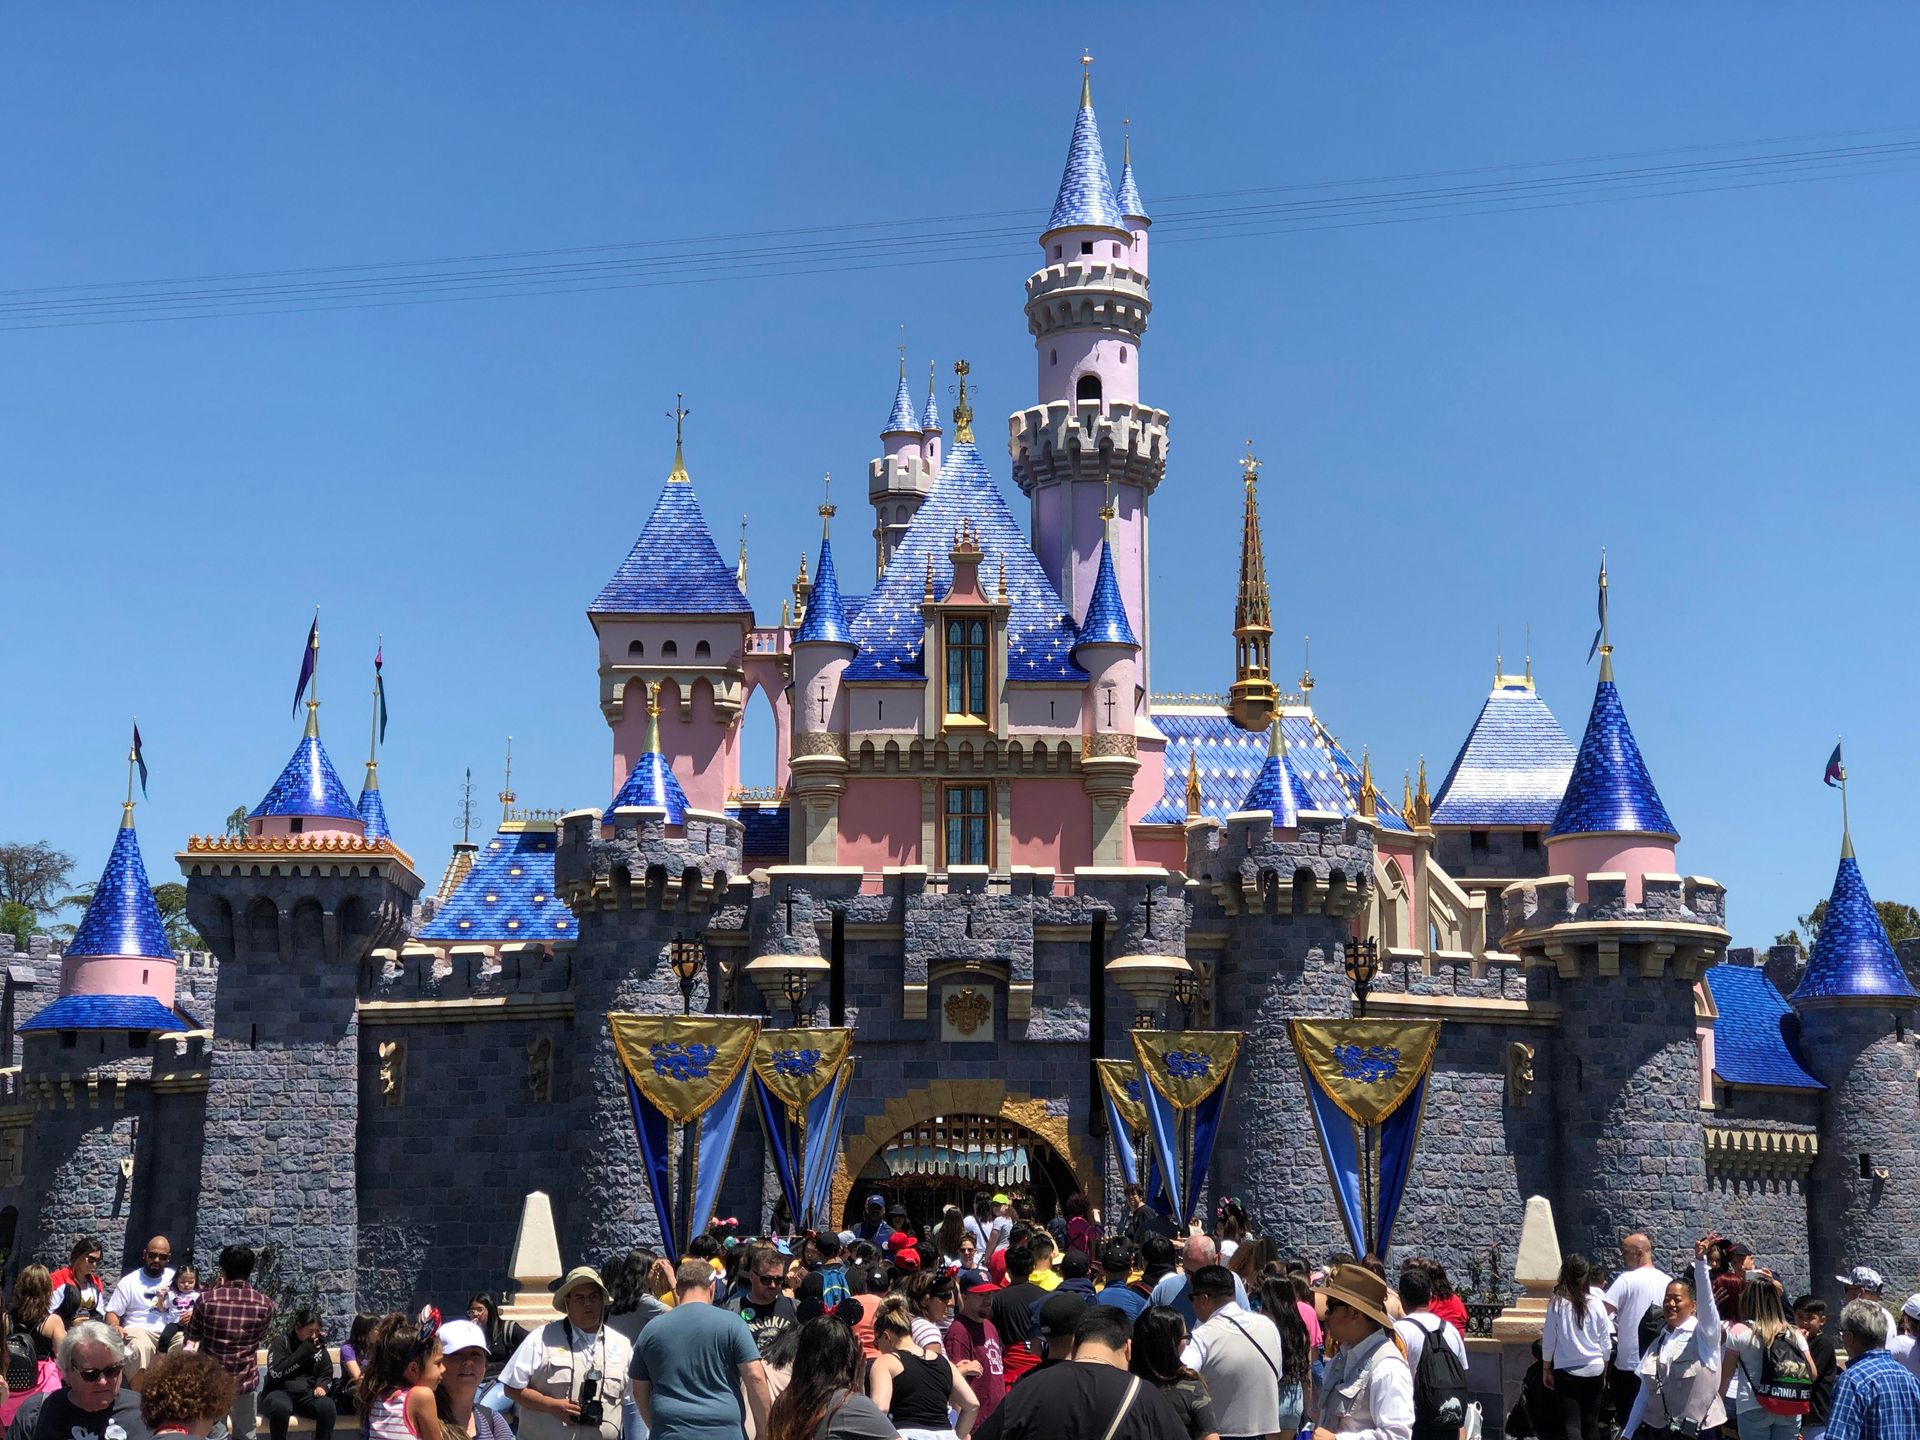 Photo of crowds at Disneyland